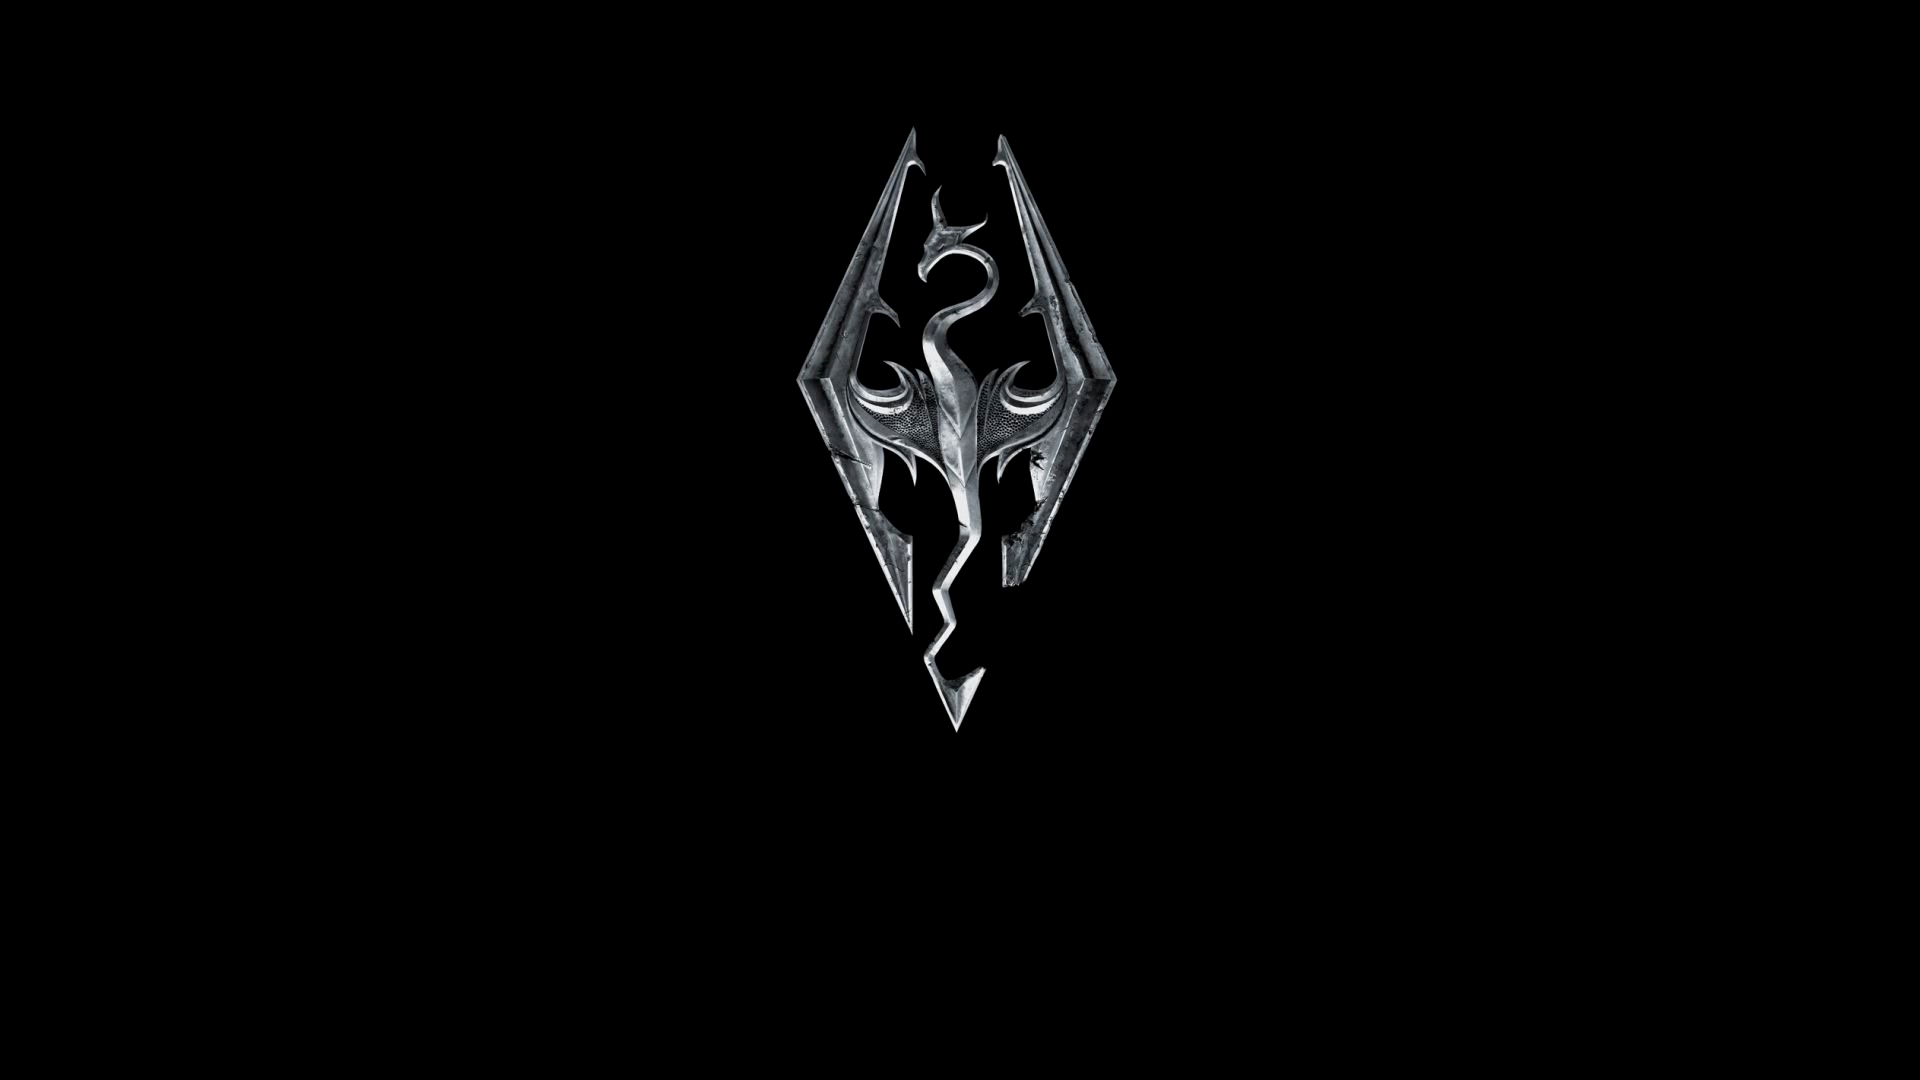 The Elder Scrolls v Skyrim лого